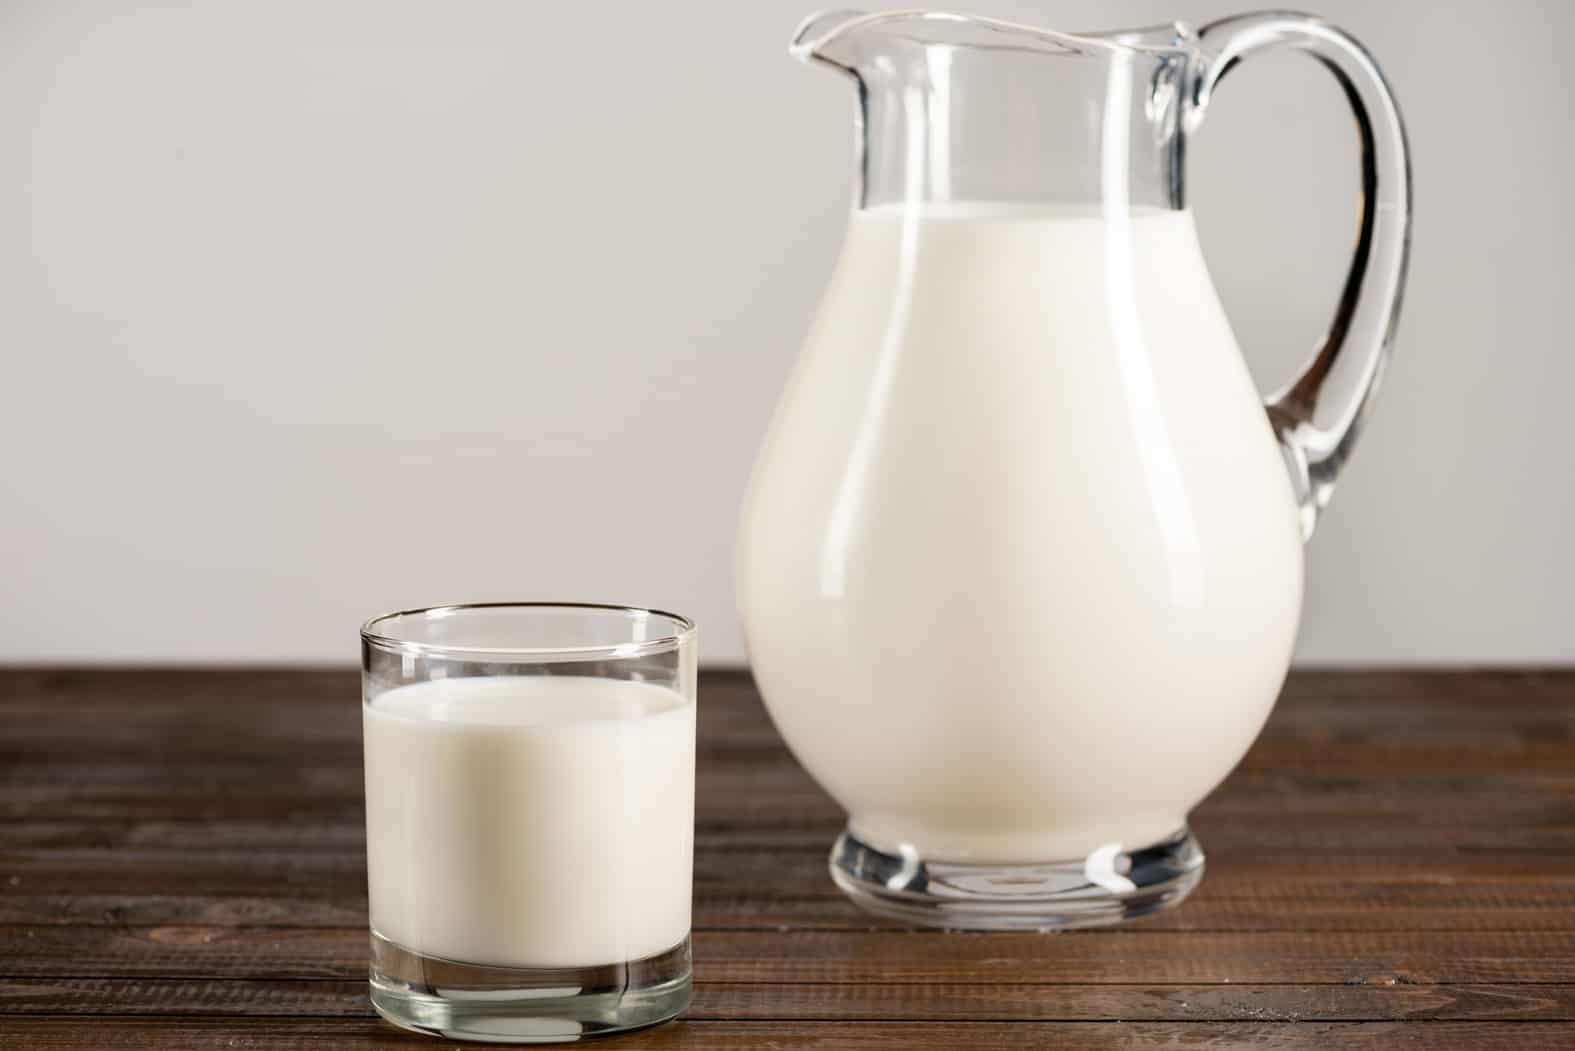 Покажи картинку молока. Молоко. Молоко фото. Кувшин с молоком. Кефир в кувшине.